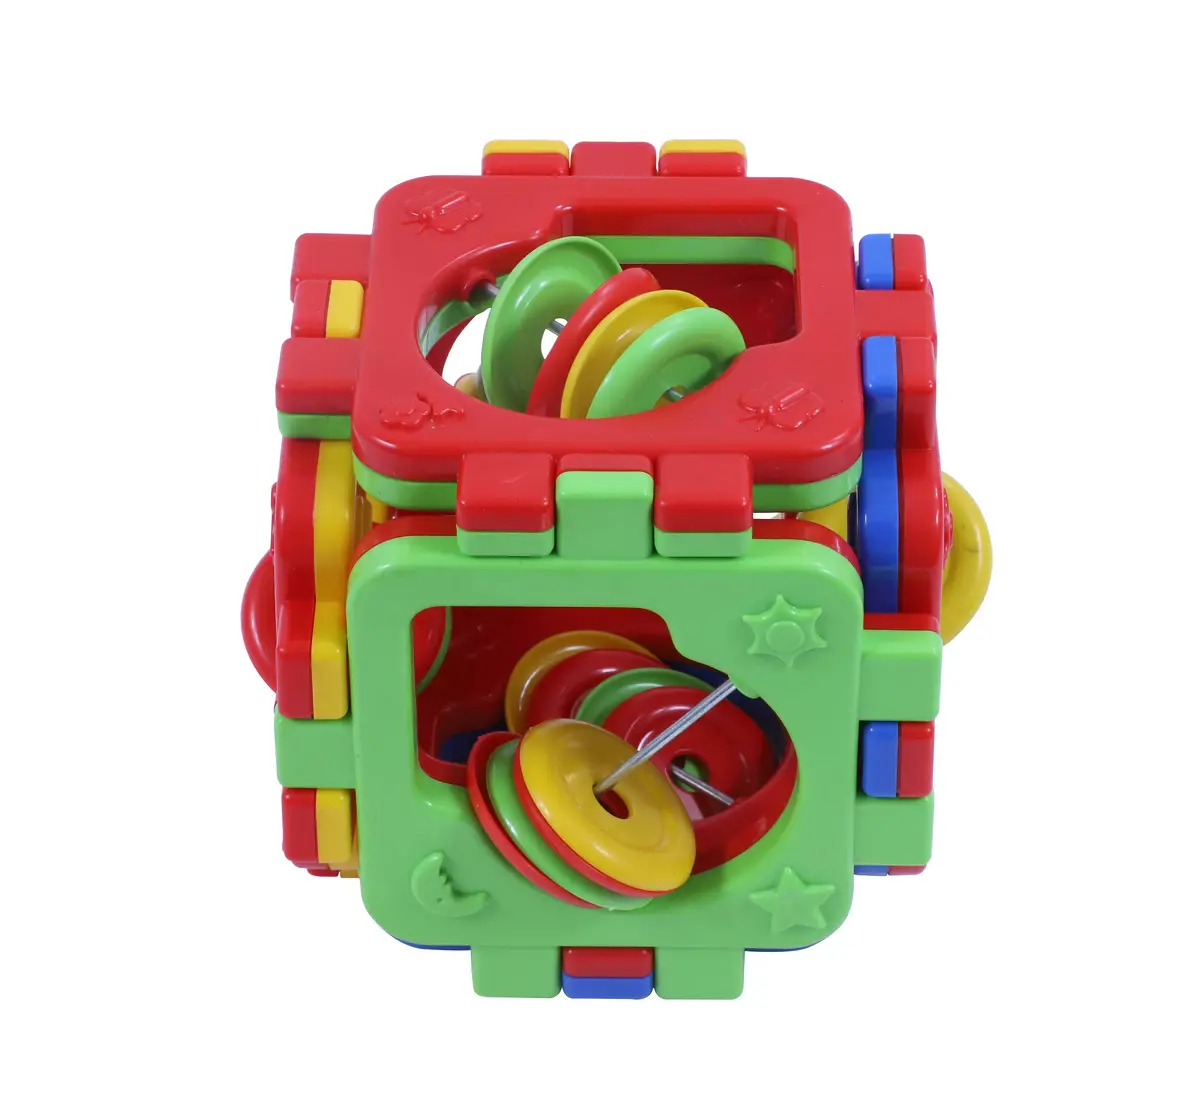 Toyzone Rattle Cubie 81388 Multicolour, 3Y+